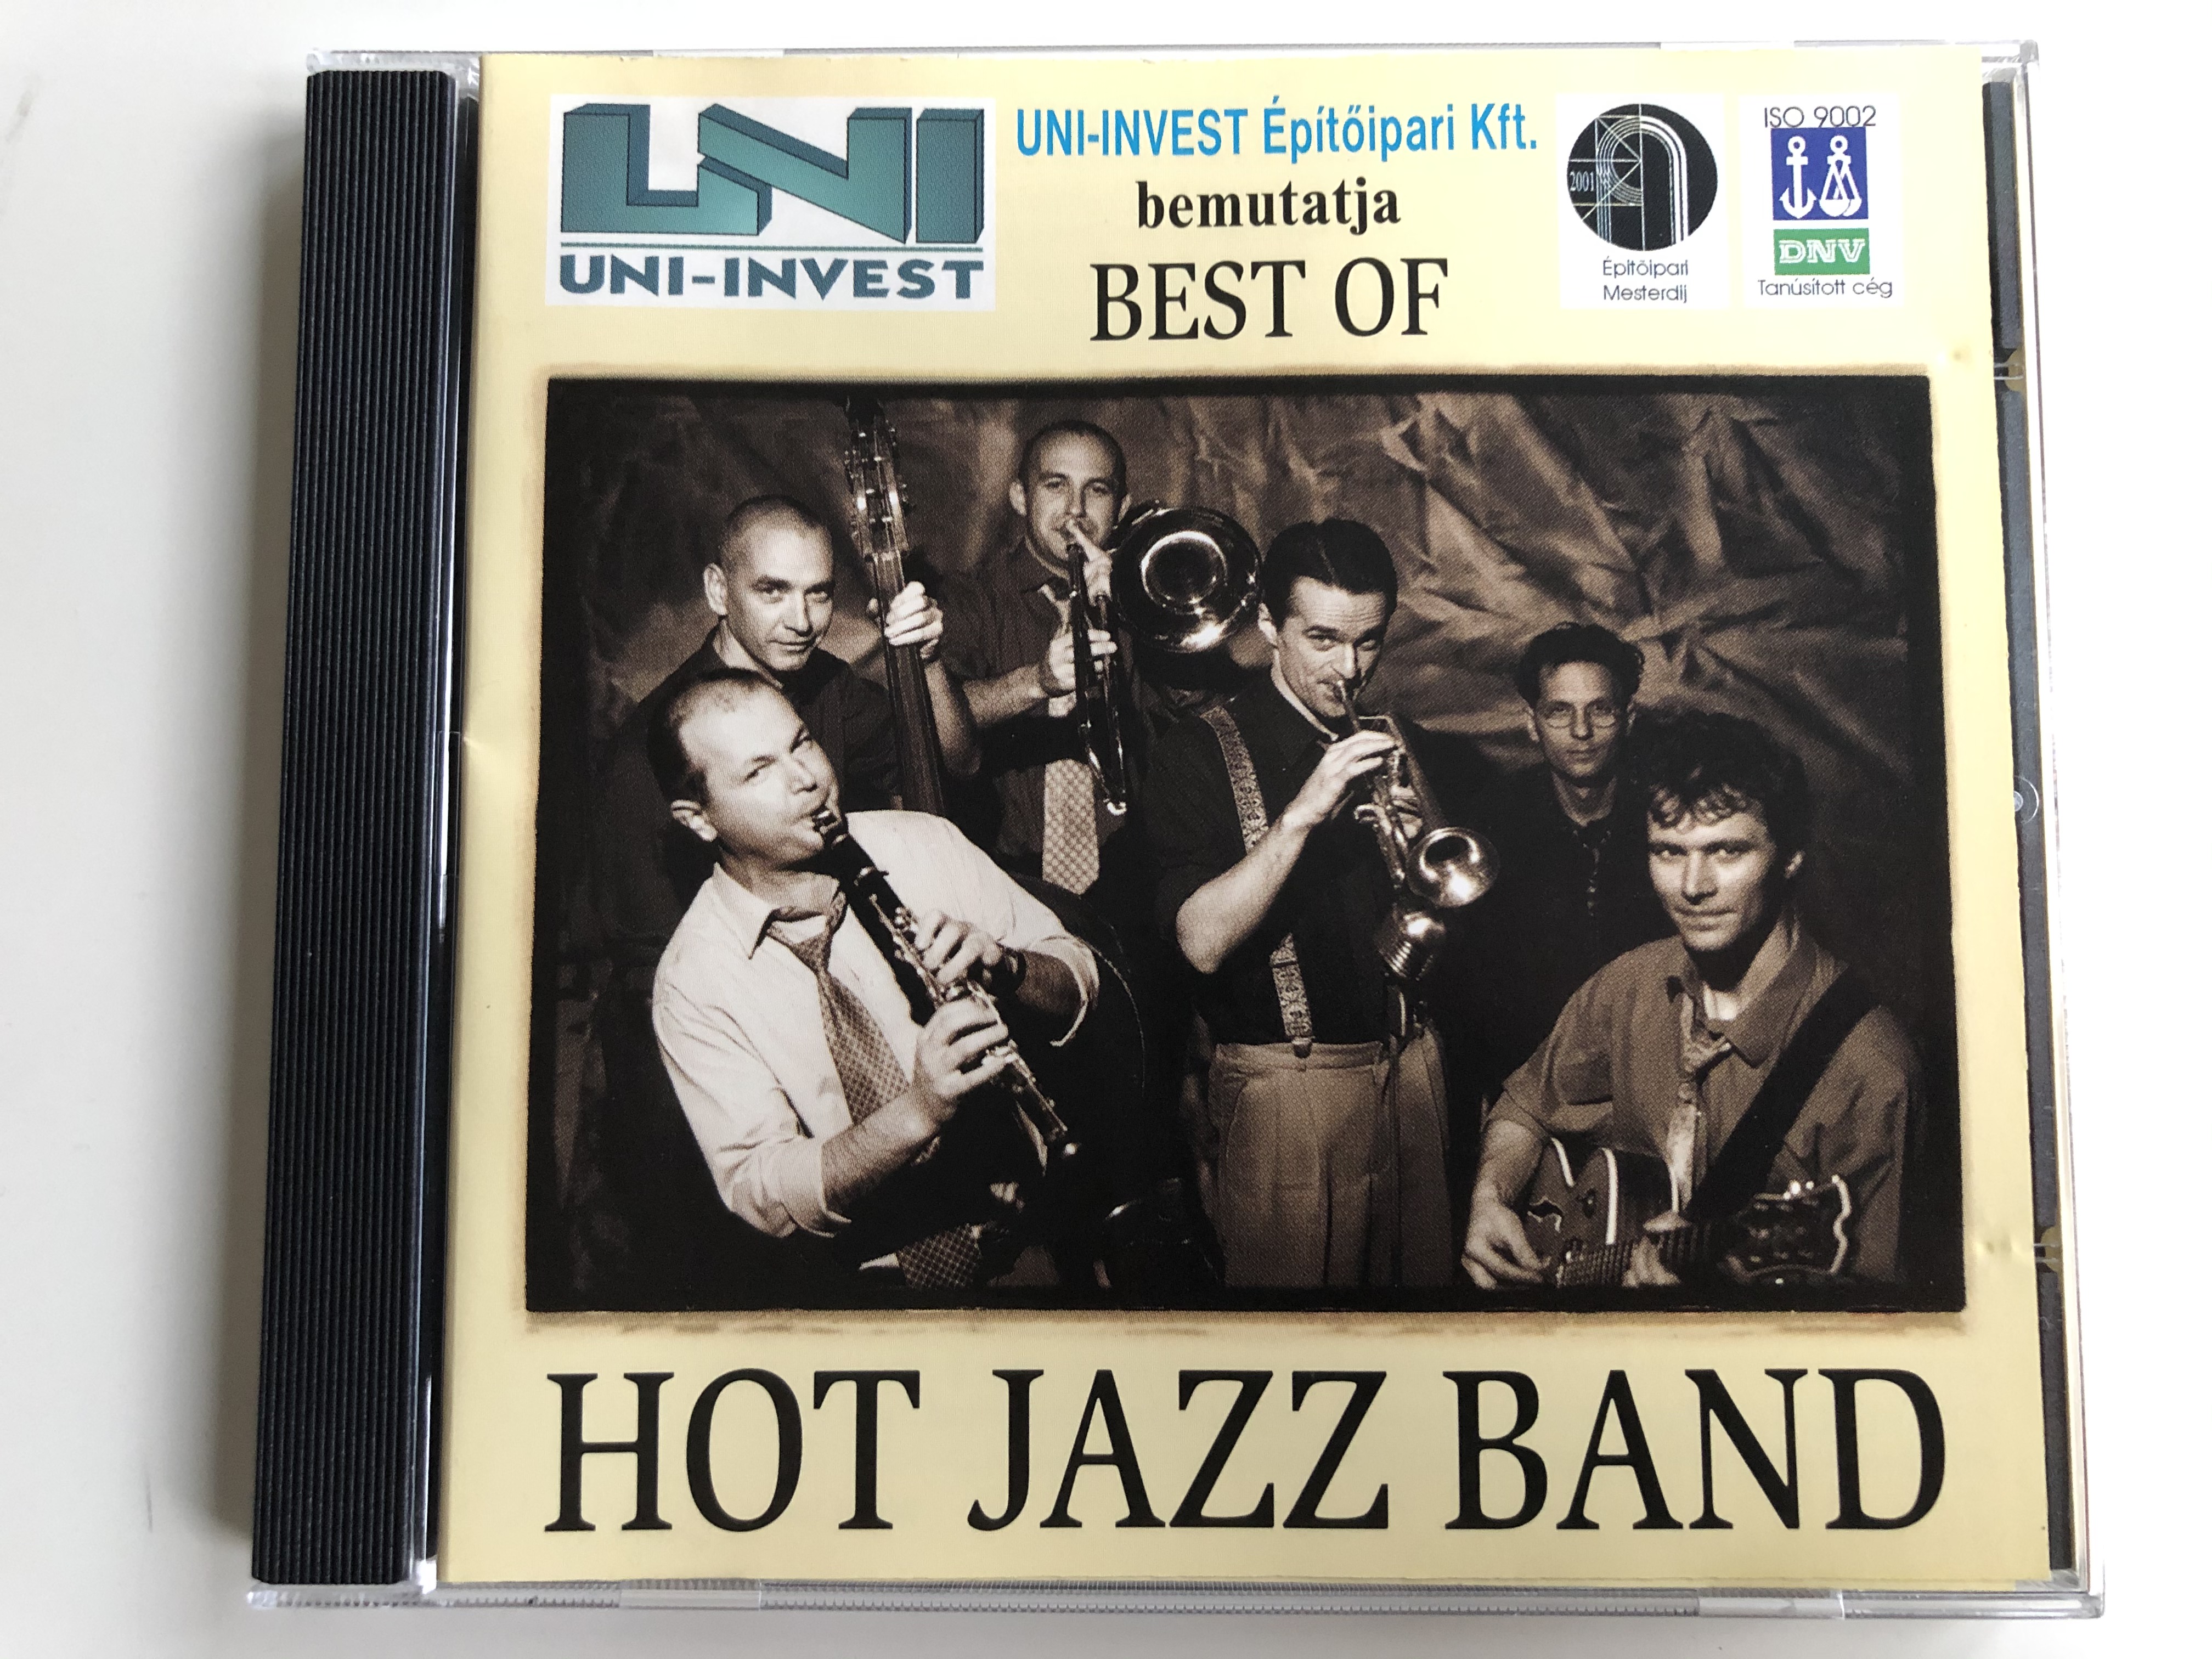 best-of-hot-jazz-band-sony-music-entertain-audio-cd-1998-iso-9002-1-.jpg